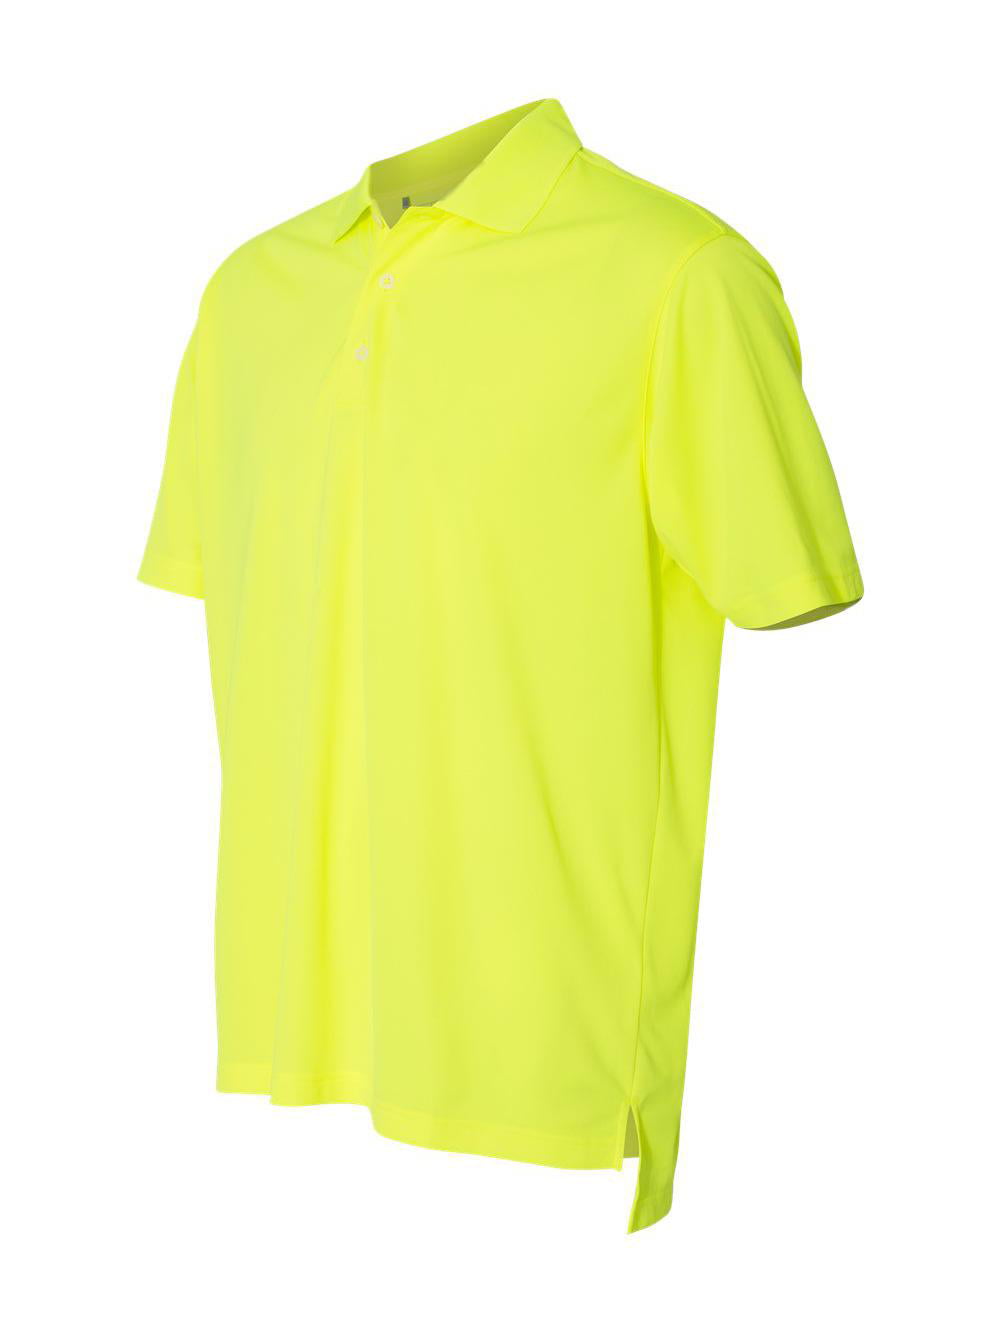 psykologisk søn Regelmæssighed Adidas. Solar Yellow/ White. L. A130. 00190303836373 - Walmart.com